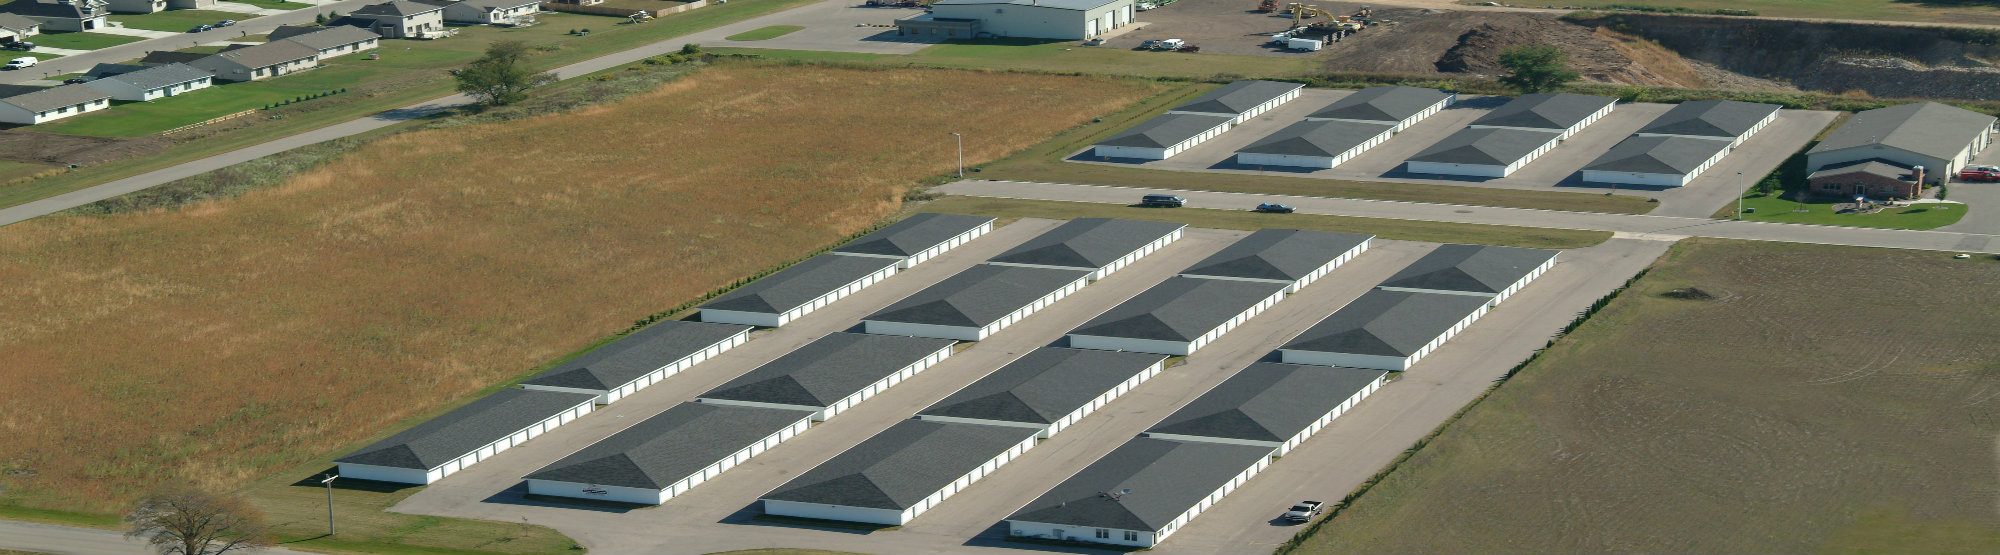 Sky view of Summit Self Storage facilities